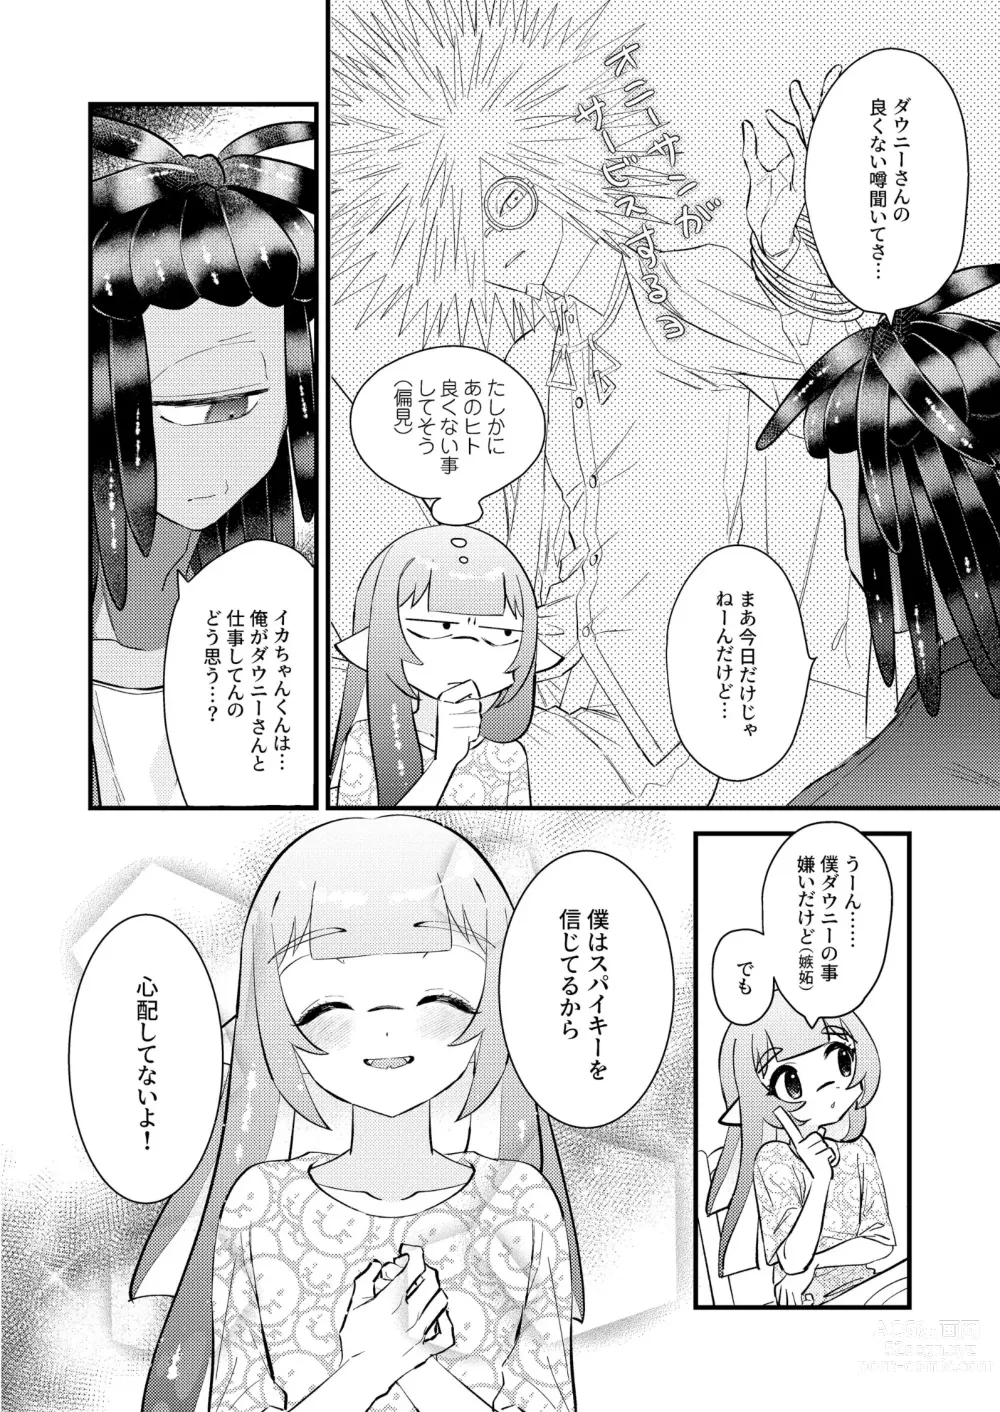 Page 7 of doujinshi Uketomete Hoshii no My Darling! - I want you to accept me my darling!